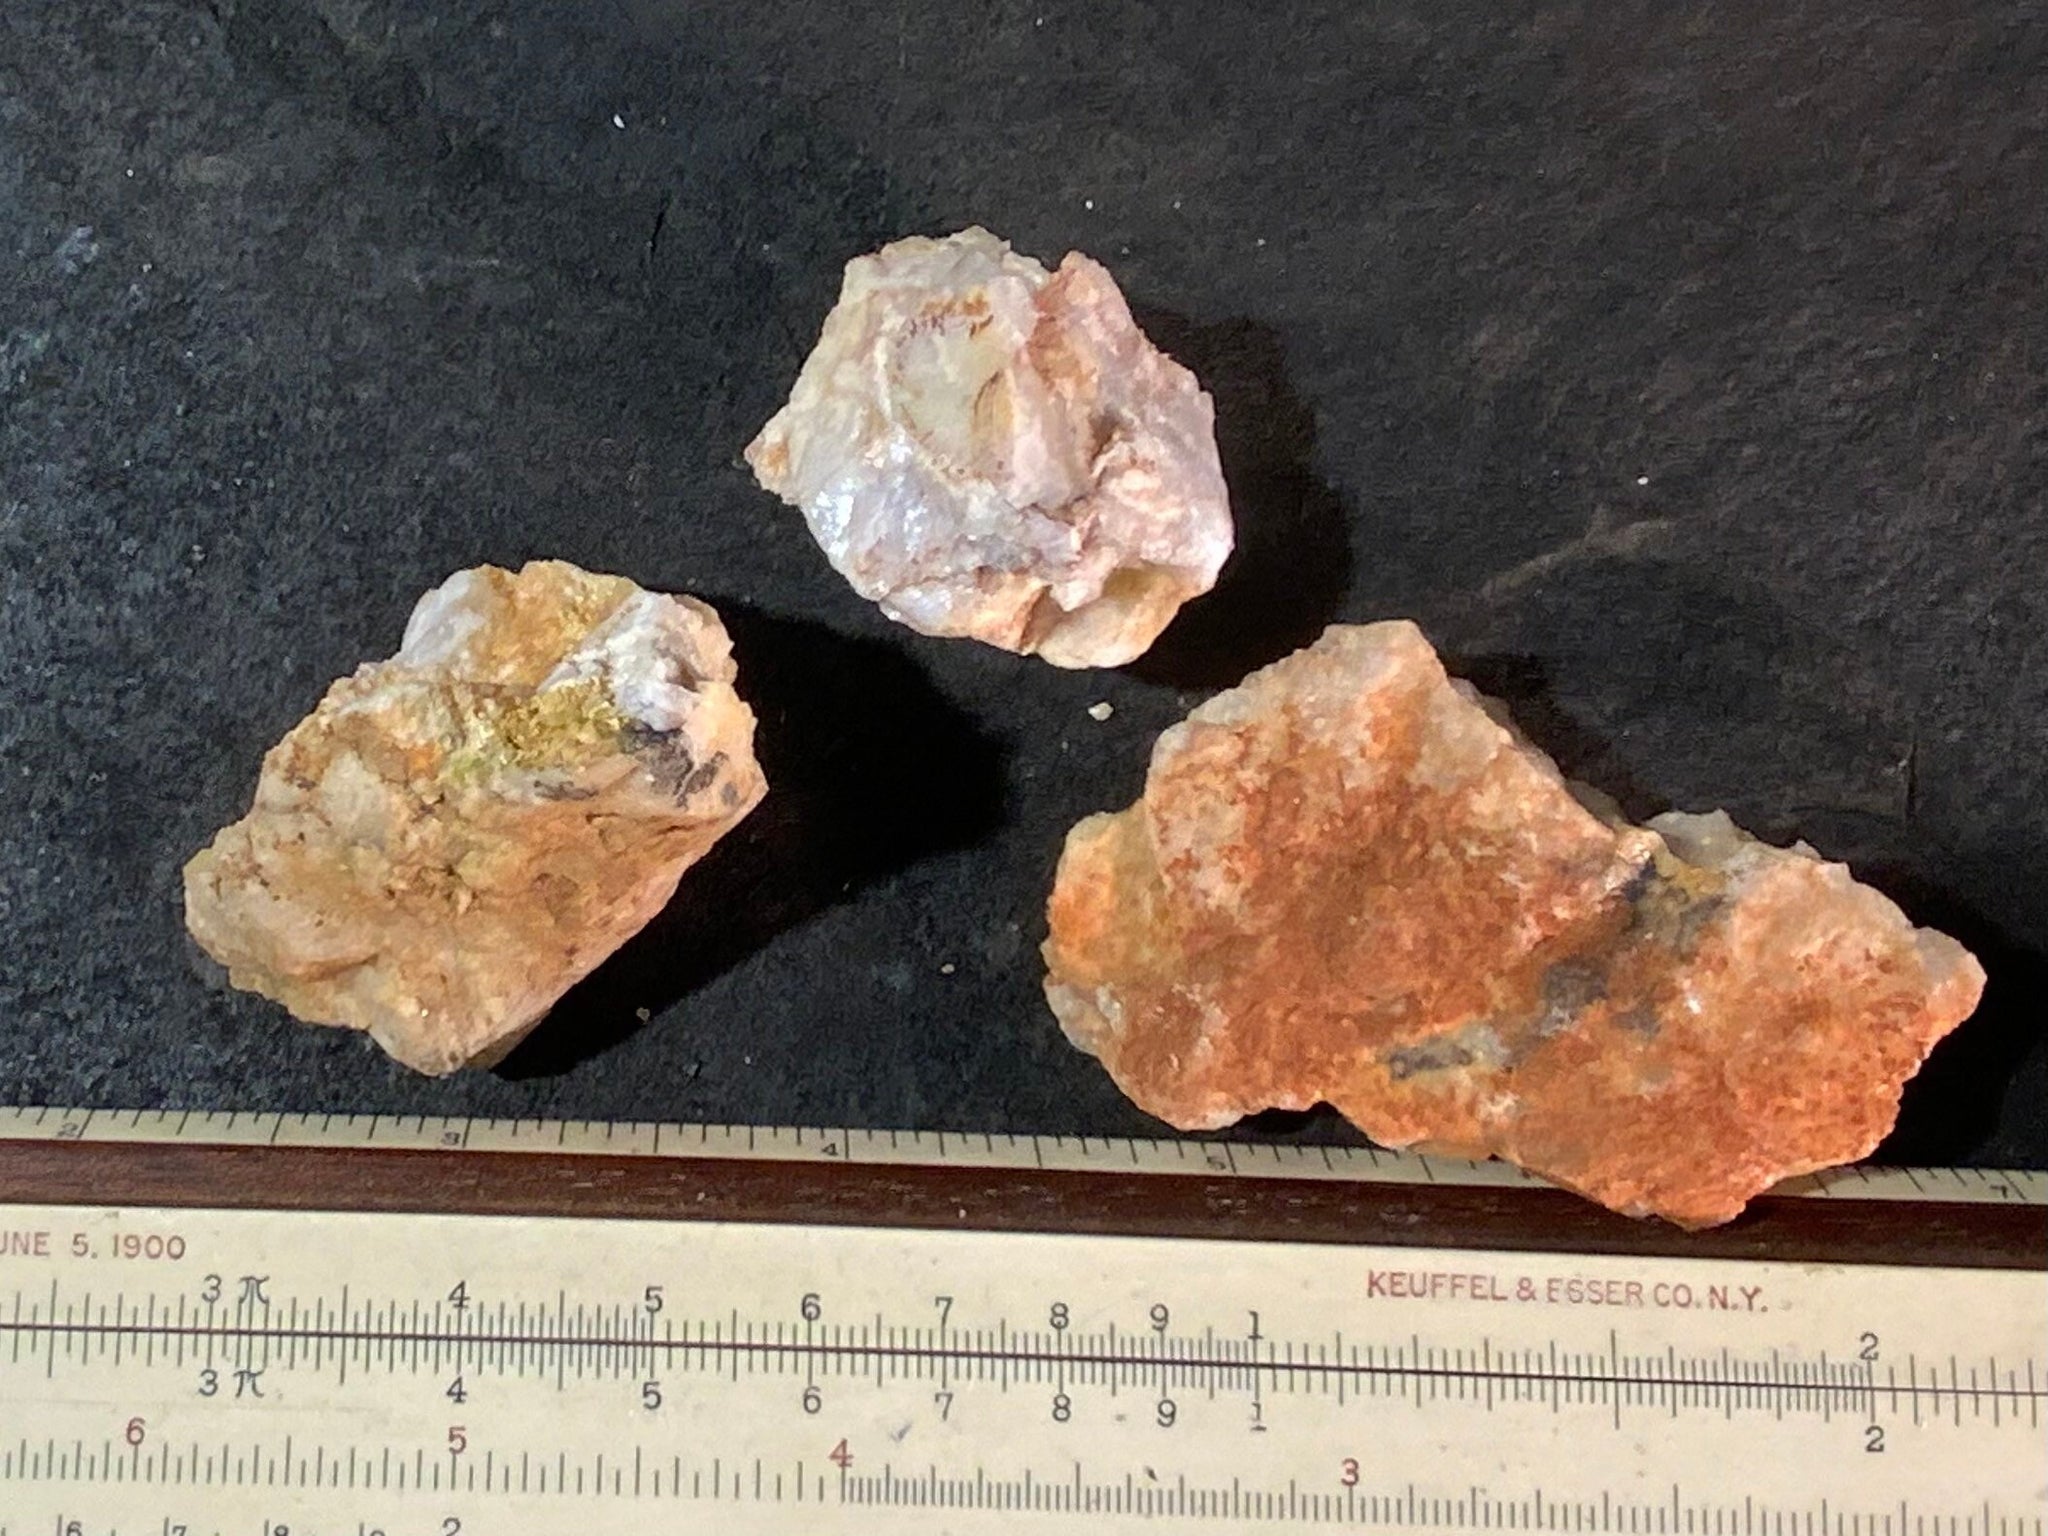 quartz rocks